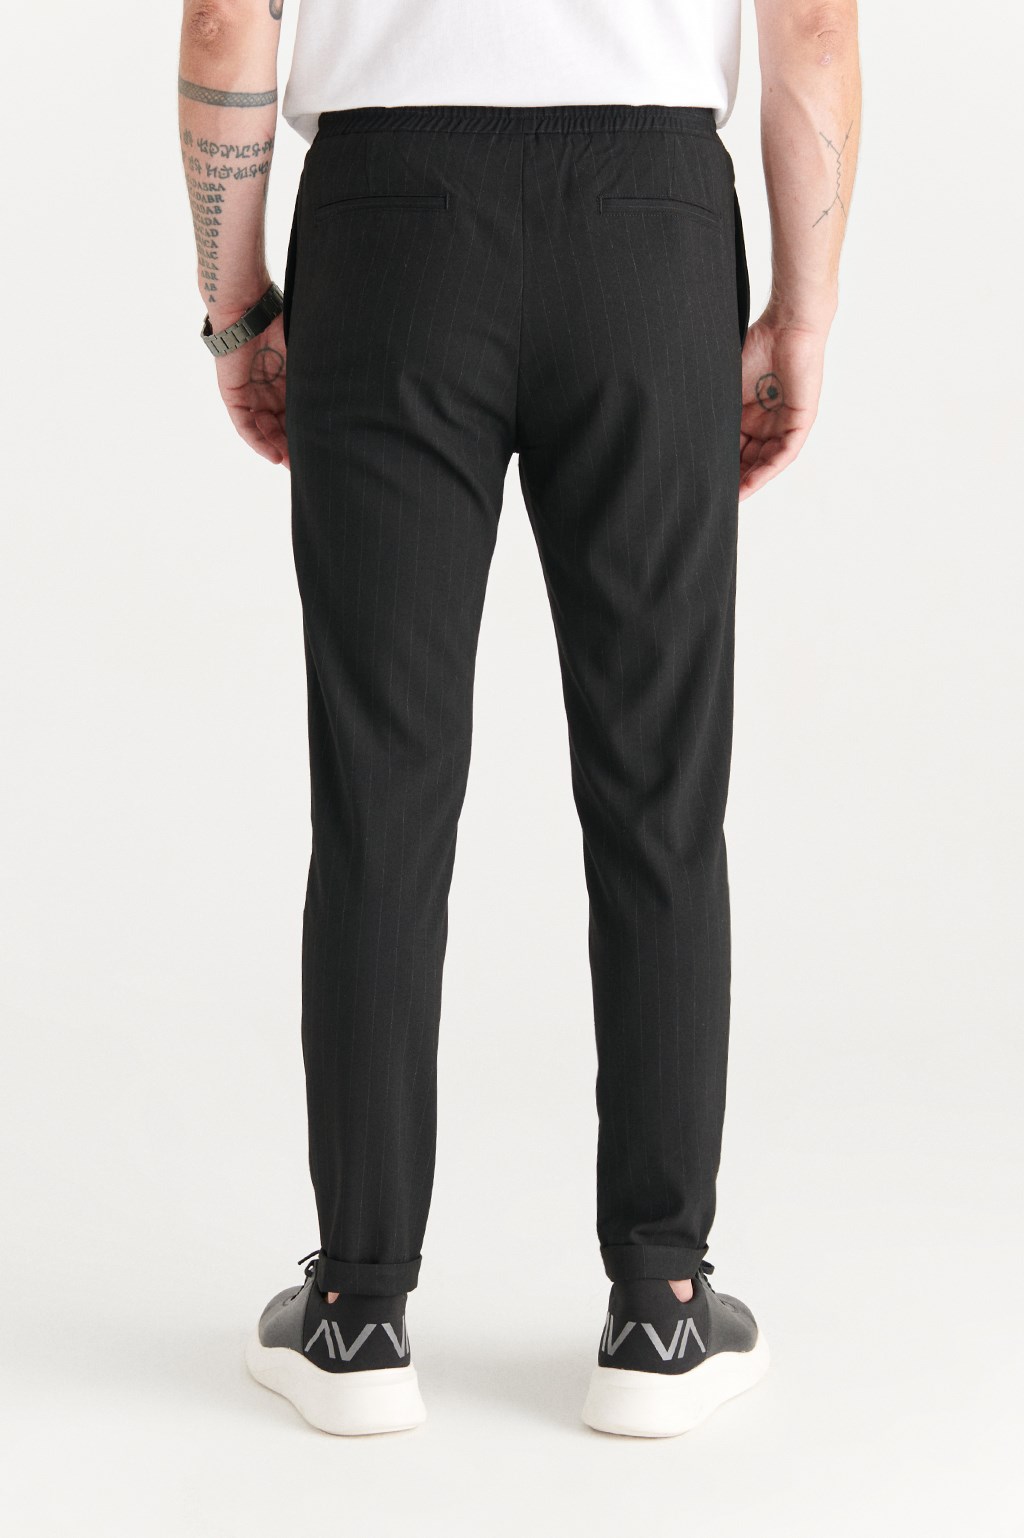 Siyah Yandan Cepli Beli Lastikli Kordonlu Çizgili Relaxed Fit Pantolon  E003001-03 - AVVA